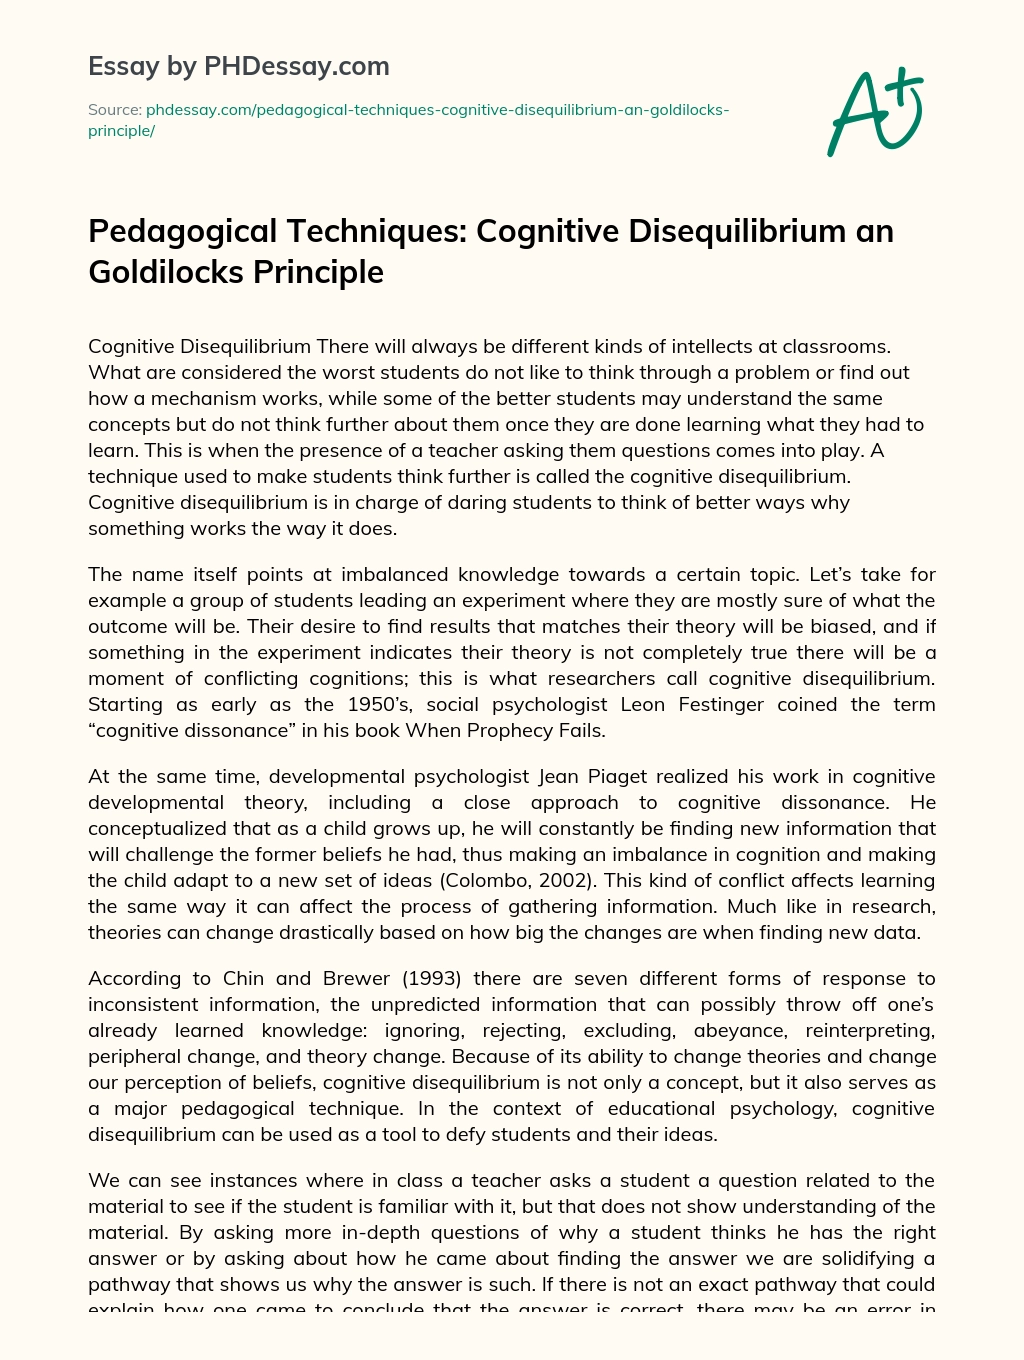 Cognitive Disequilibrium an Goldilocks Principle essay